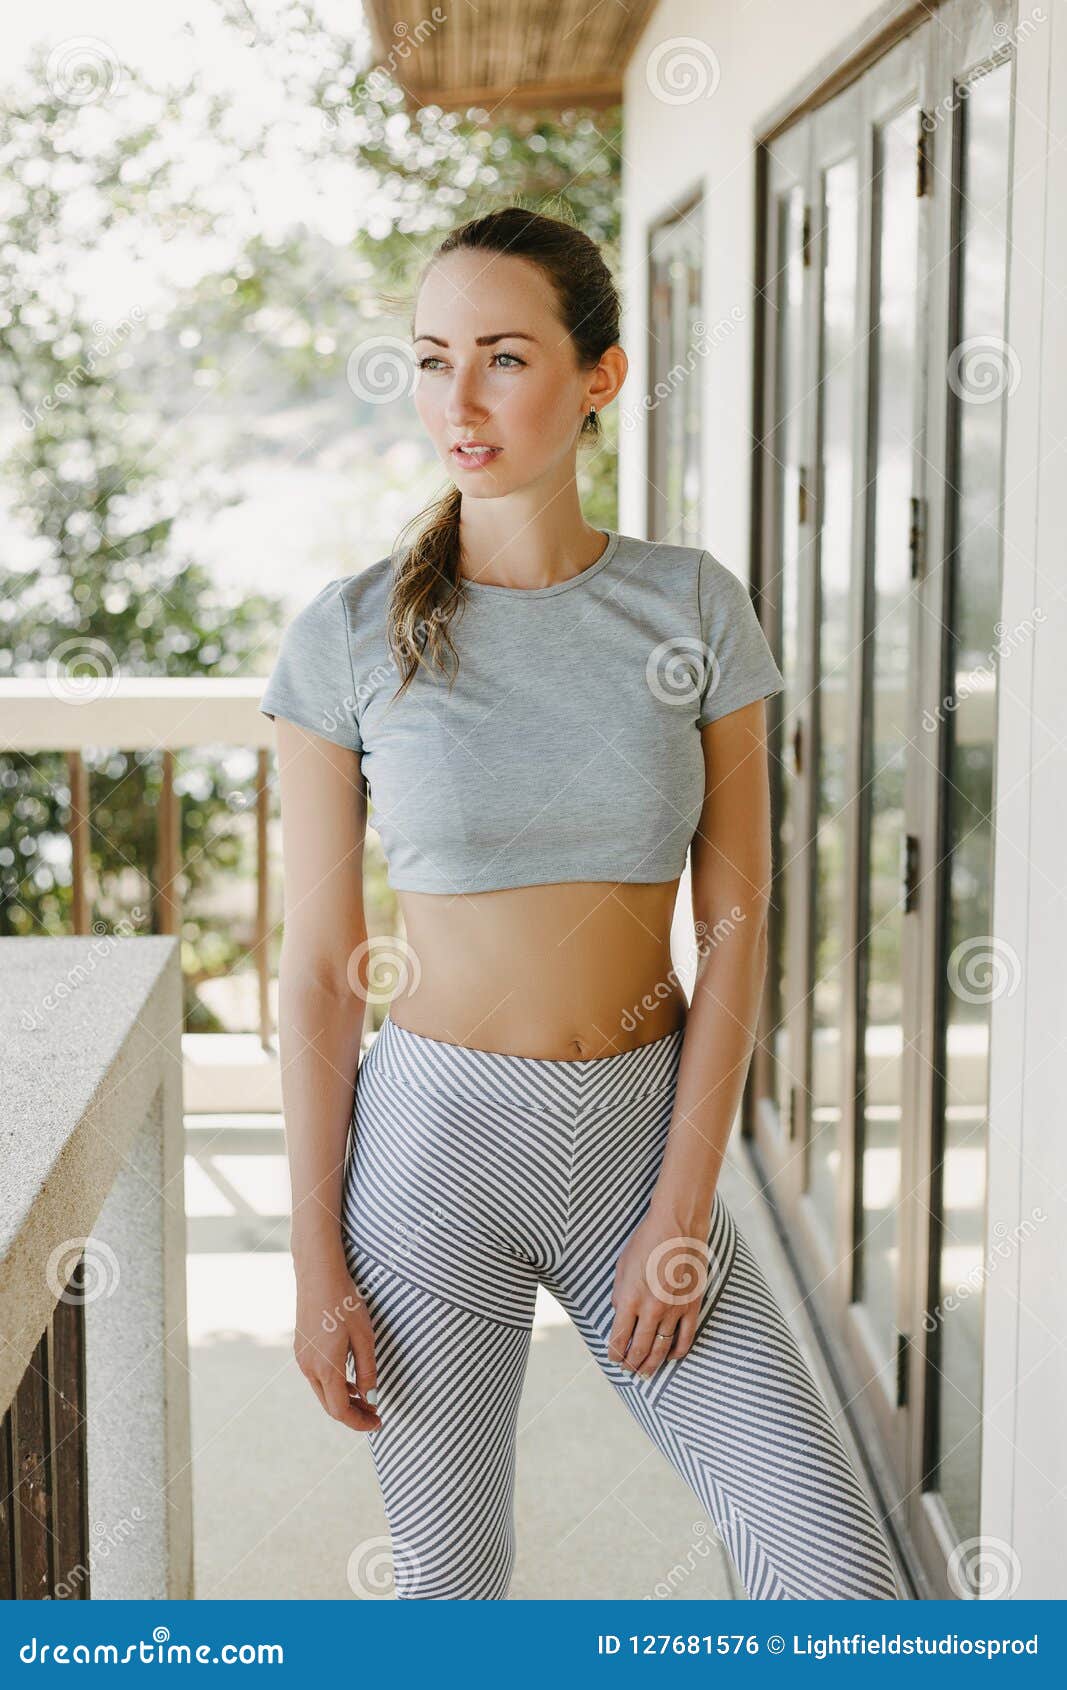 beautiful-slim-woman-sportswear-standing-porch-127681576.jpg